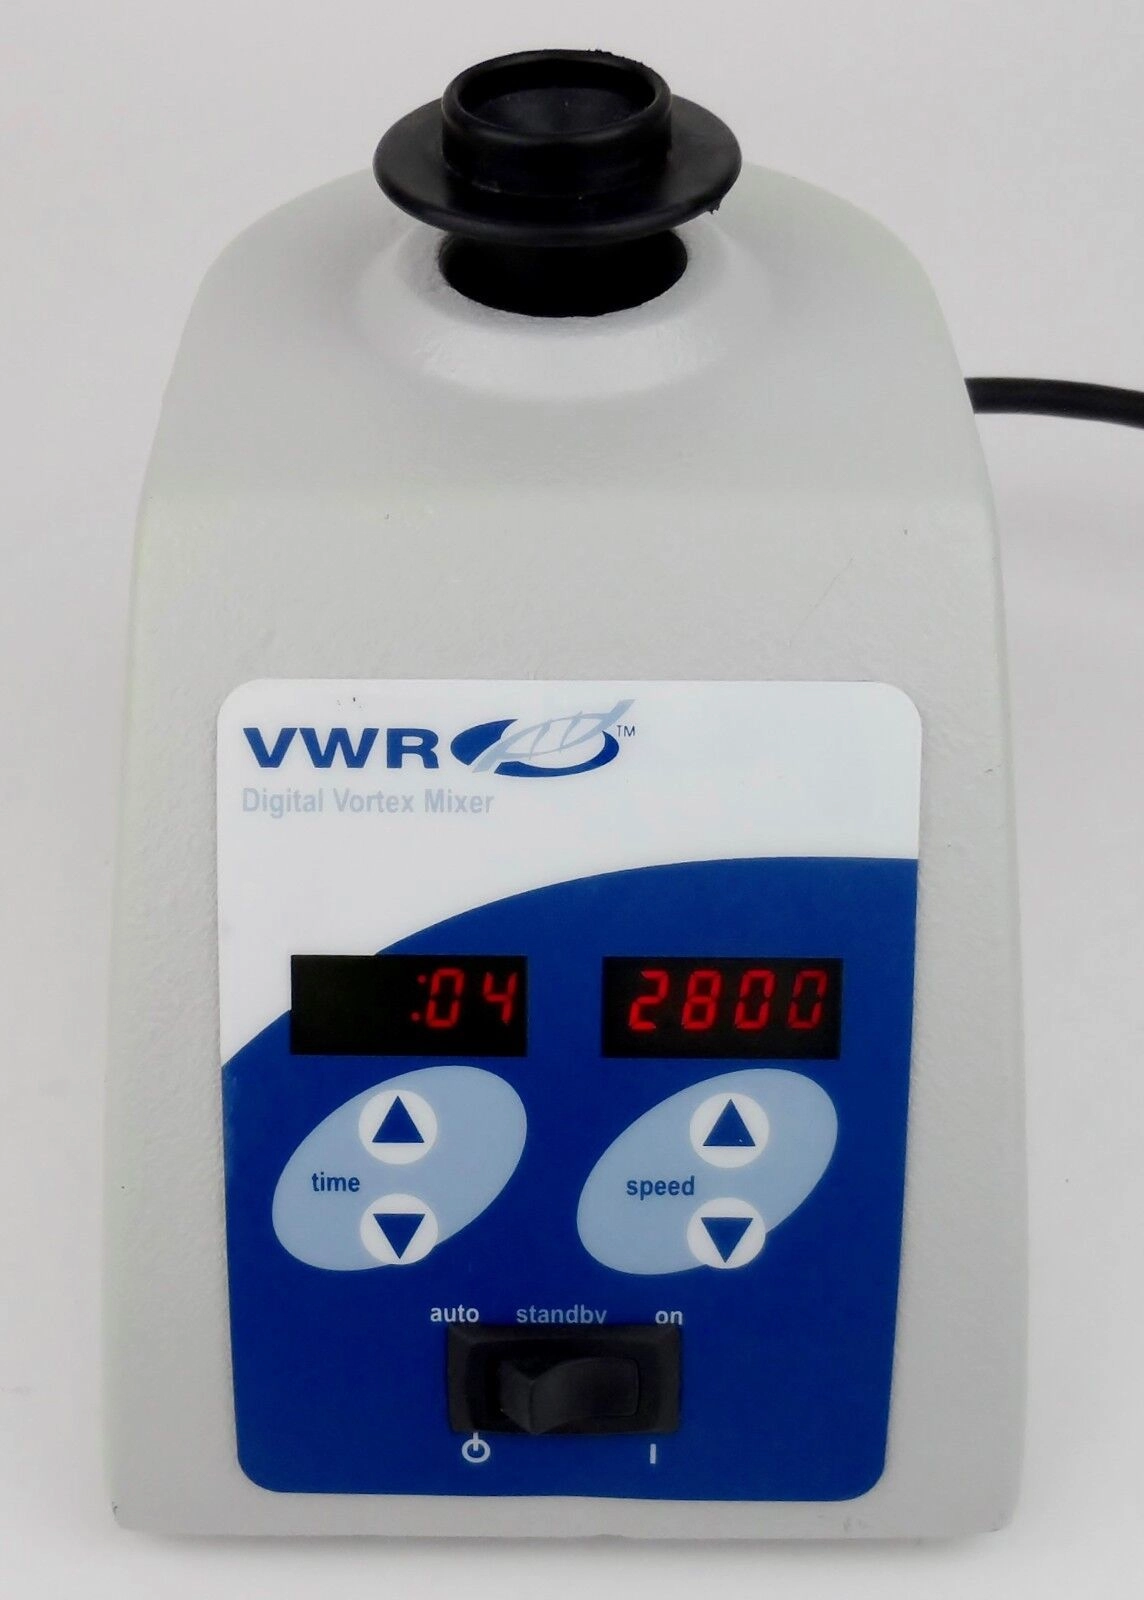 VWR Digital Vortex Mixer